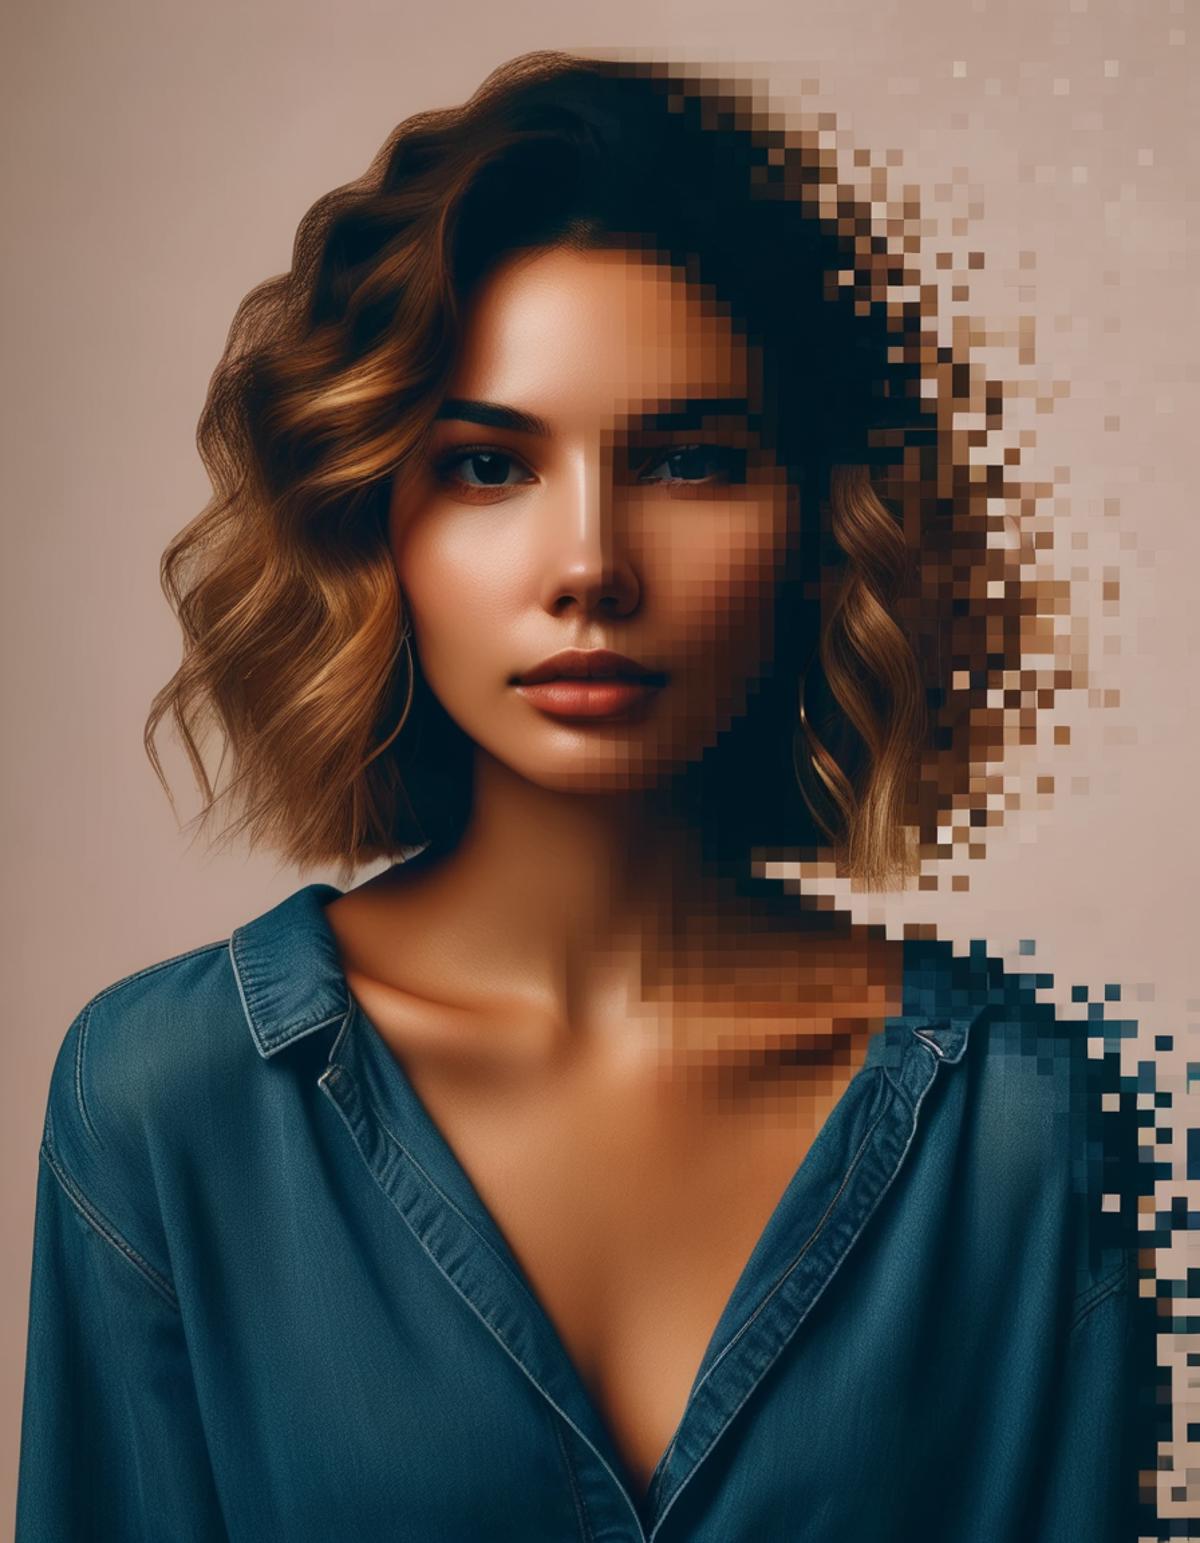 AI model image by joachim_s